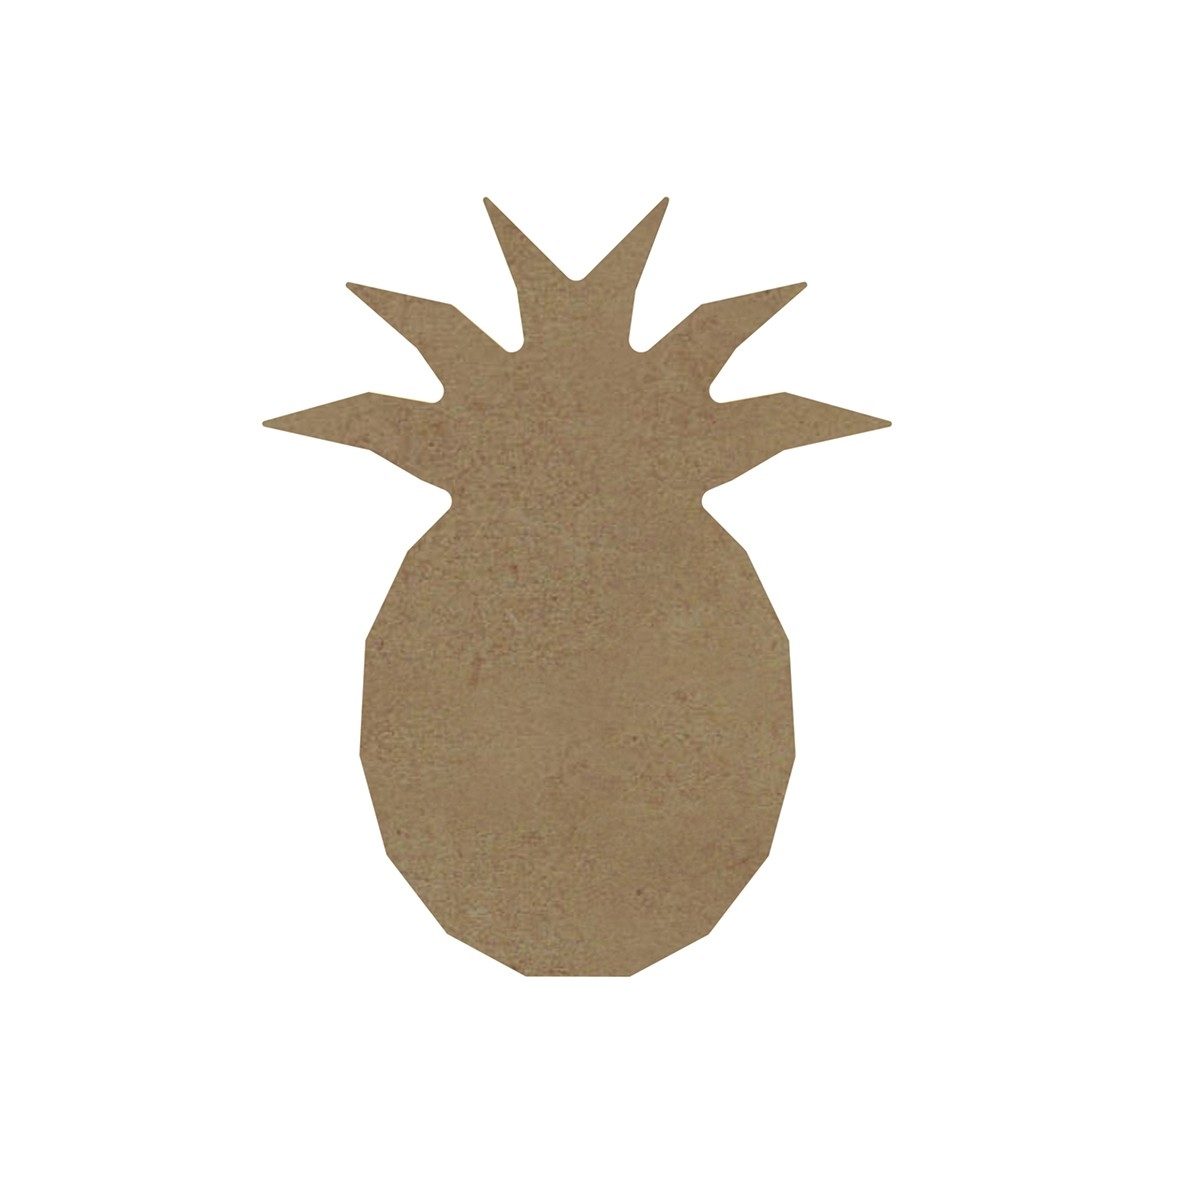 Pineapple - Wooden Craft Template (11 x 14cm)